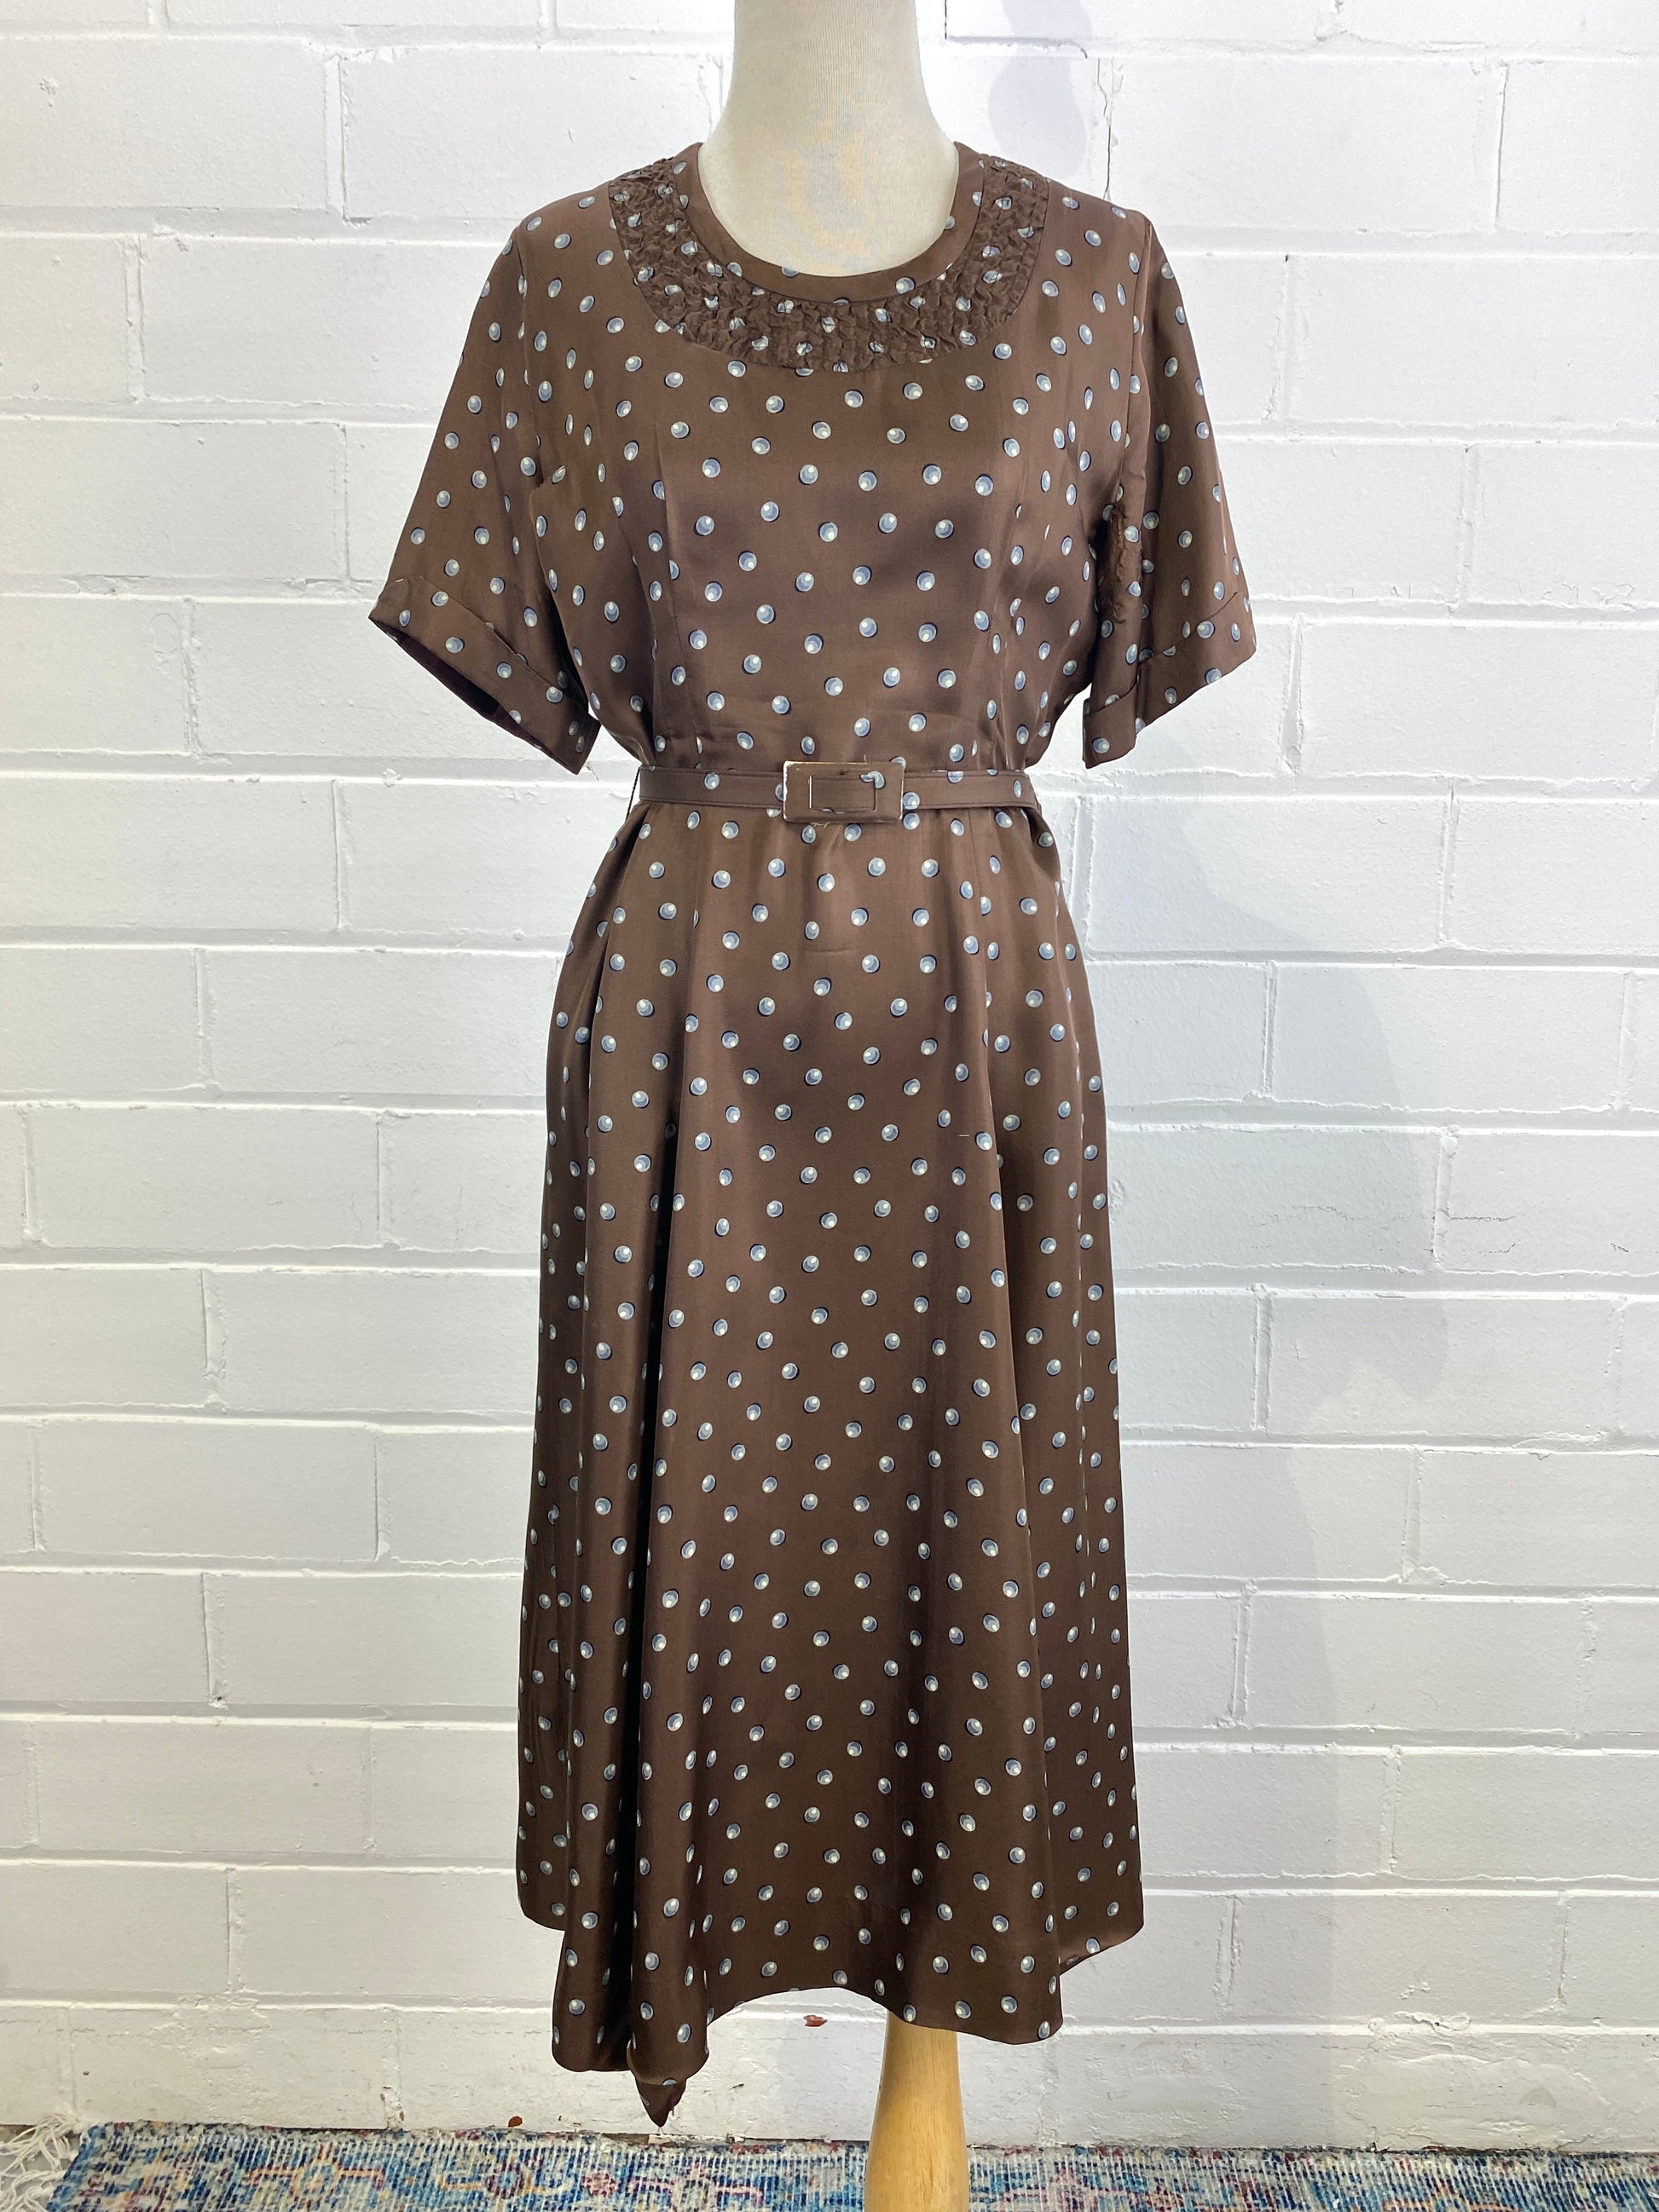 Brown silk 1950s pola dot dress with belt. Ian Drummond Vintage. 